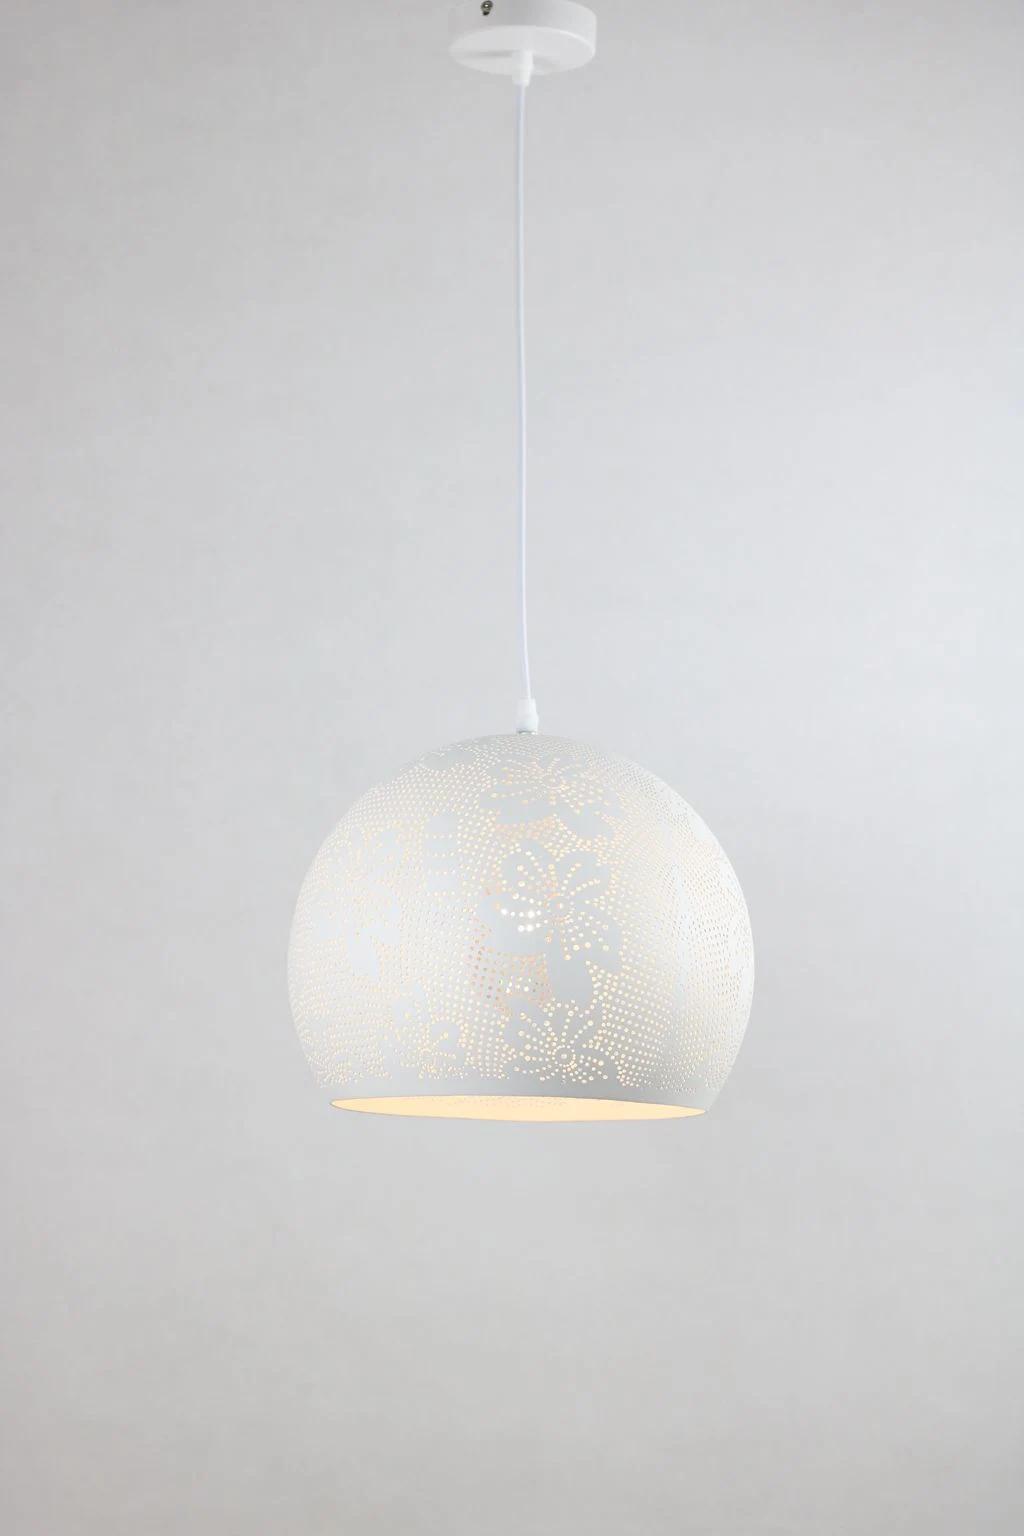 Modern Reto Corrosion Lamp Shade Indoor Light Pendant Lighting